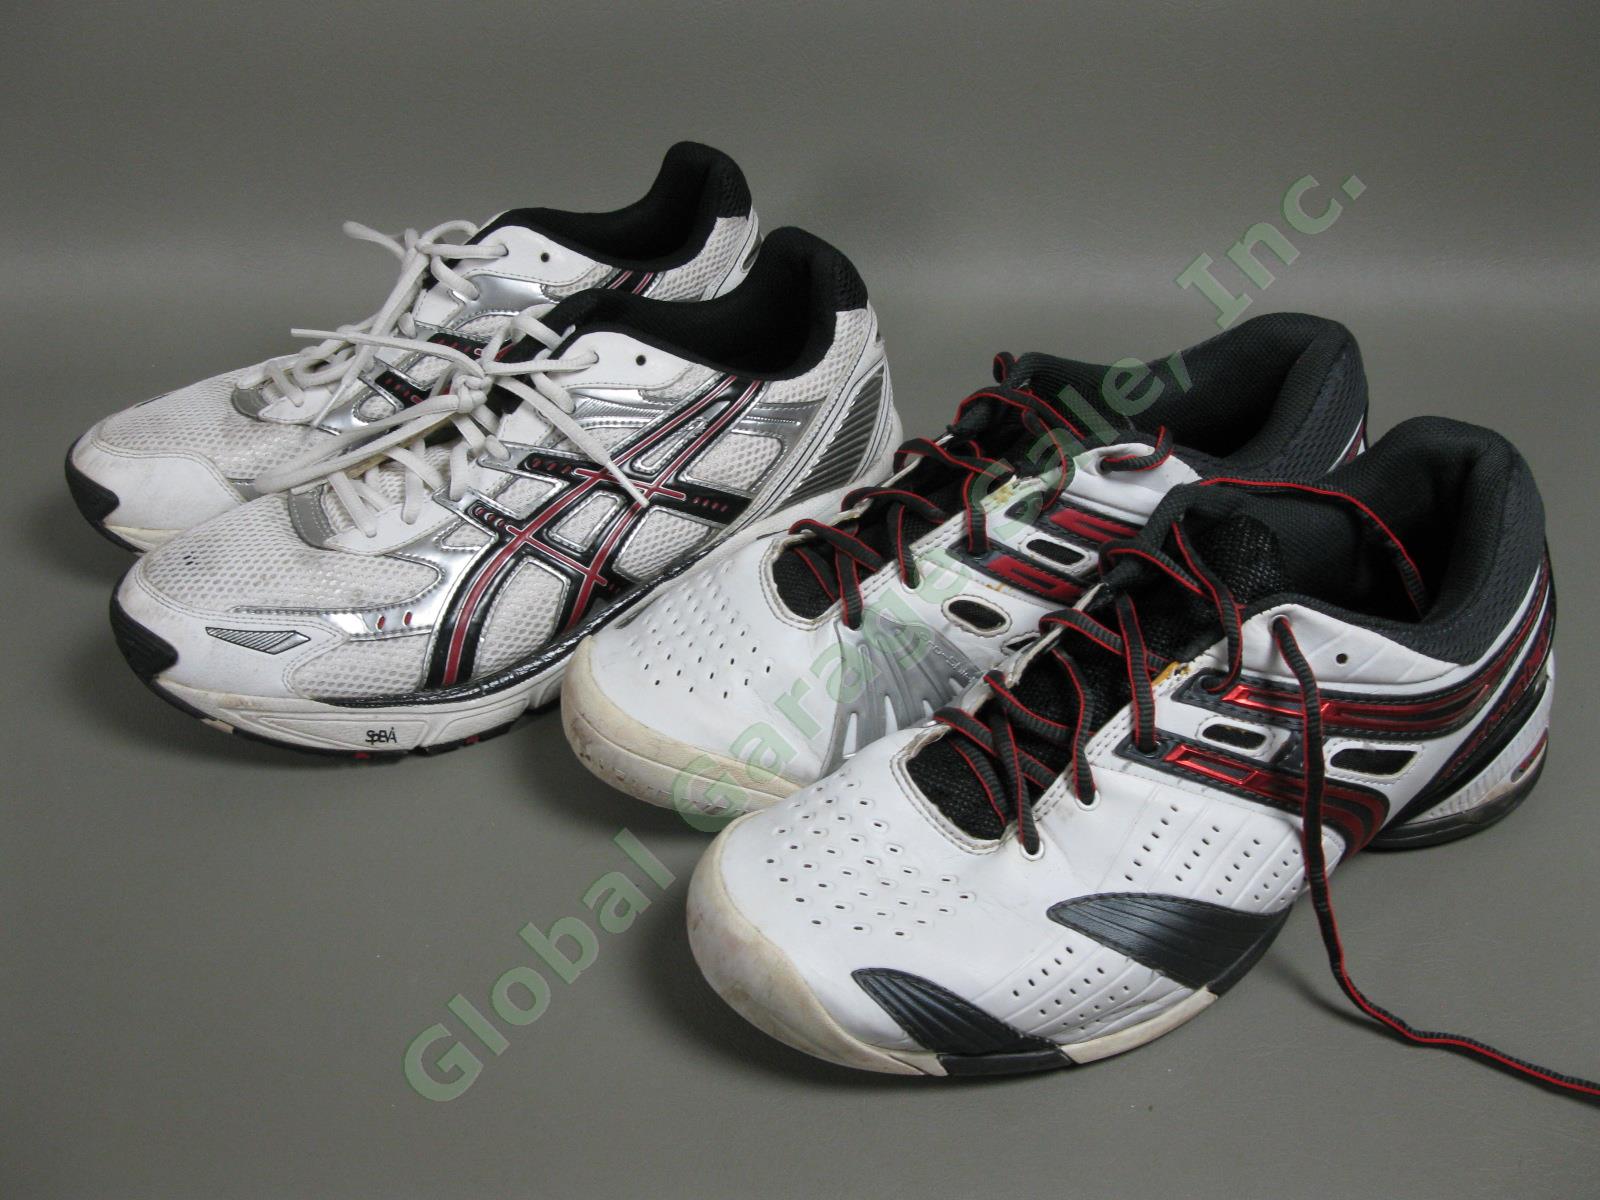 10 Pairs Mens Sneaker Shoe Lot New Balance Under Armour Asics Brooks Size 8.5-11 7